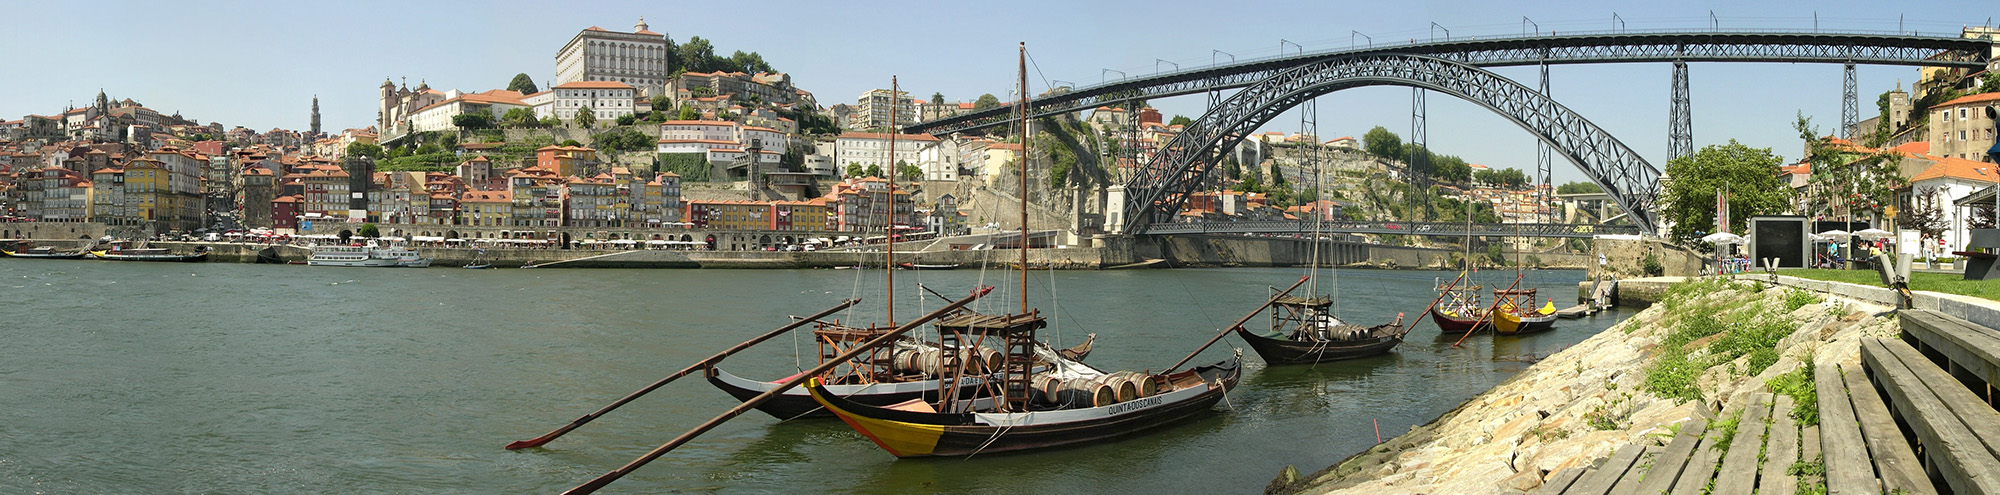 Oporto, Portugal and the Douro River, Photo credit: Wikimedia Commons